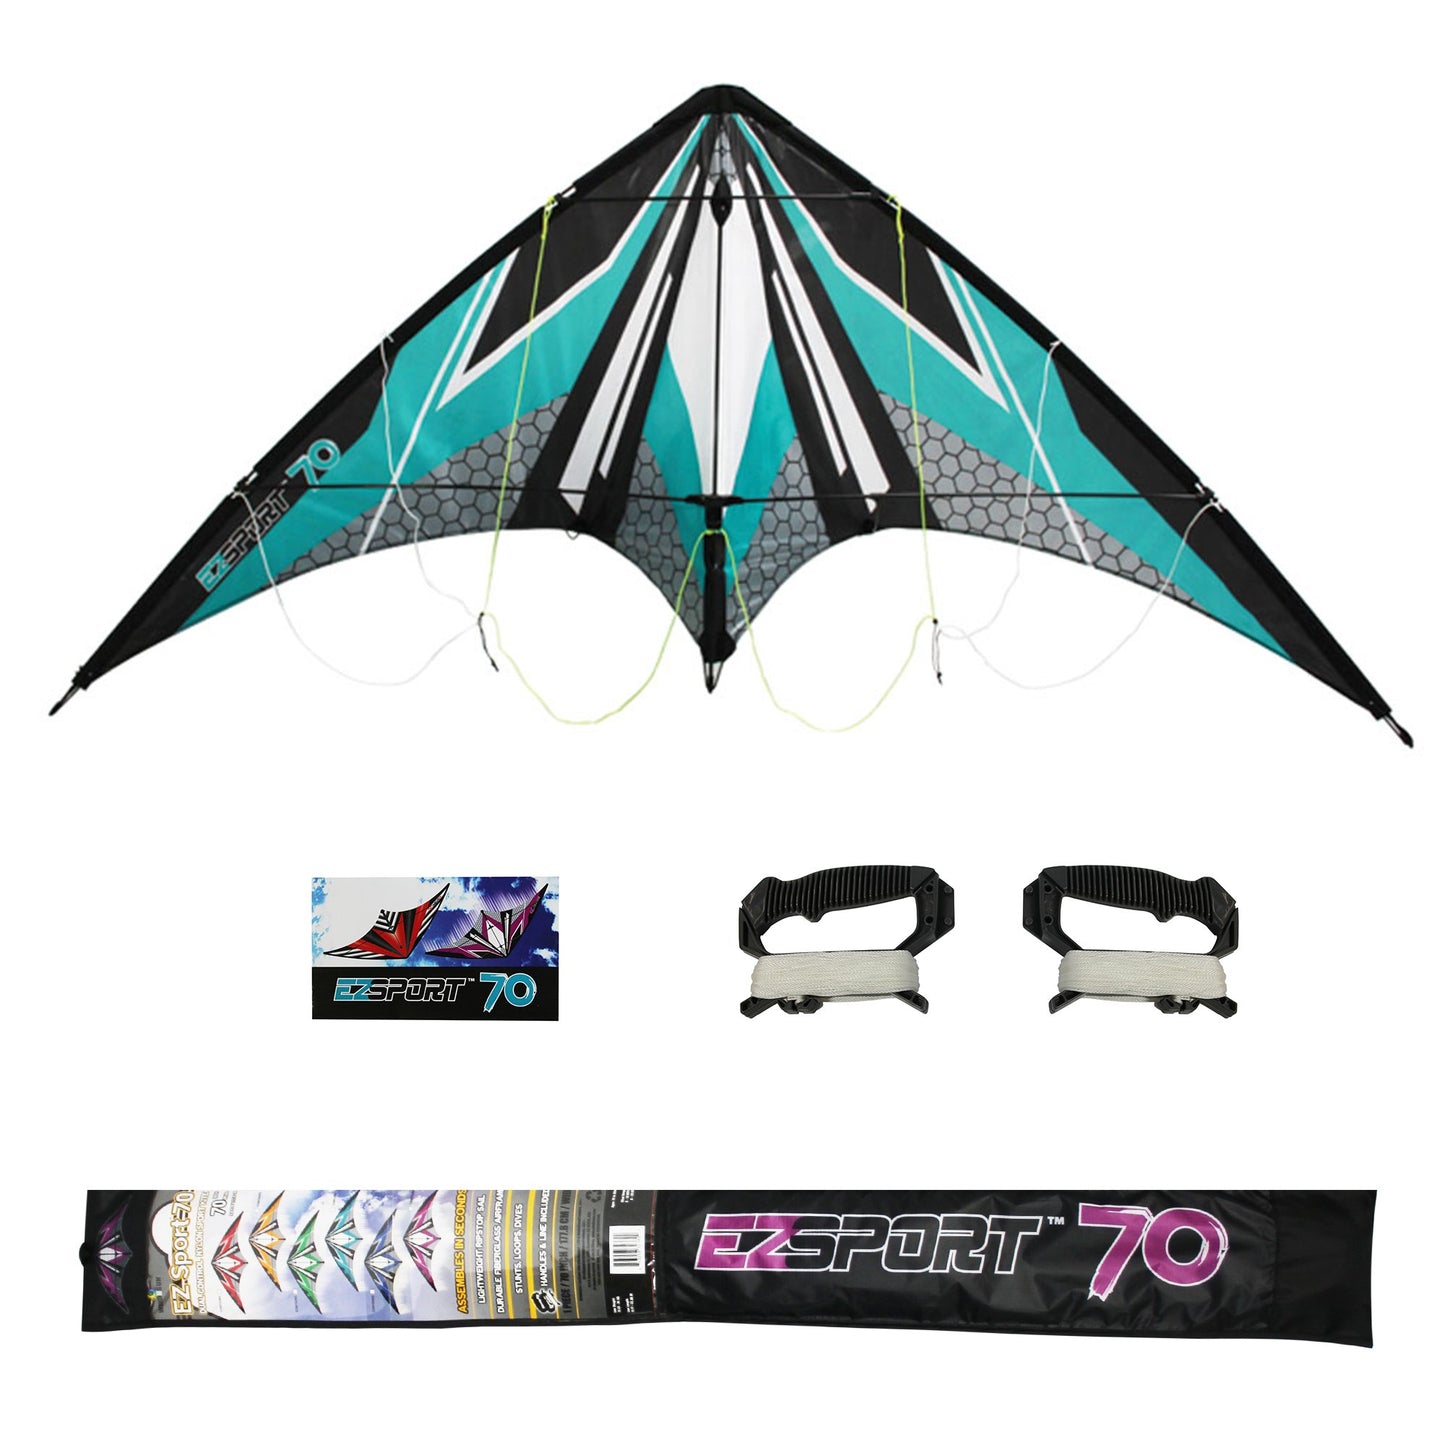 WindNSun EZ Sport 70 Dual Control Sport Kite Teal Hexagon Nylon Kite photo showing handle